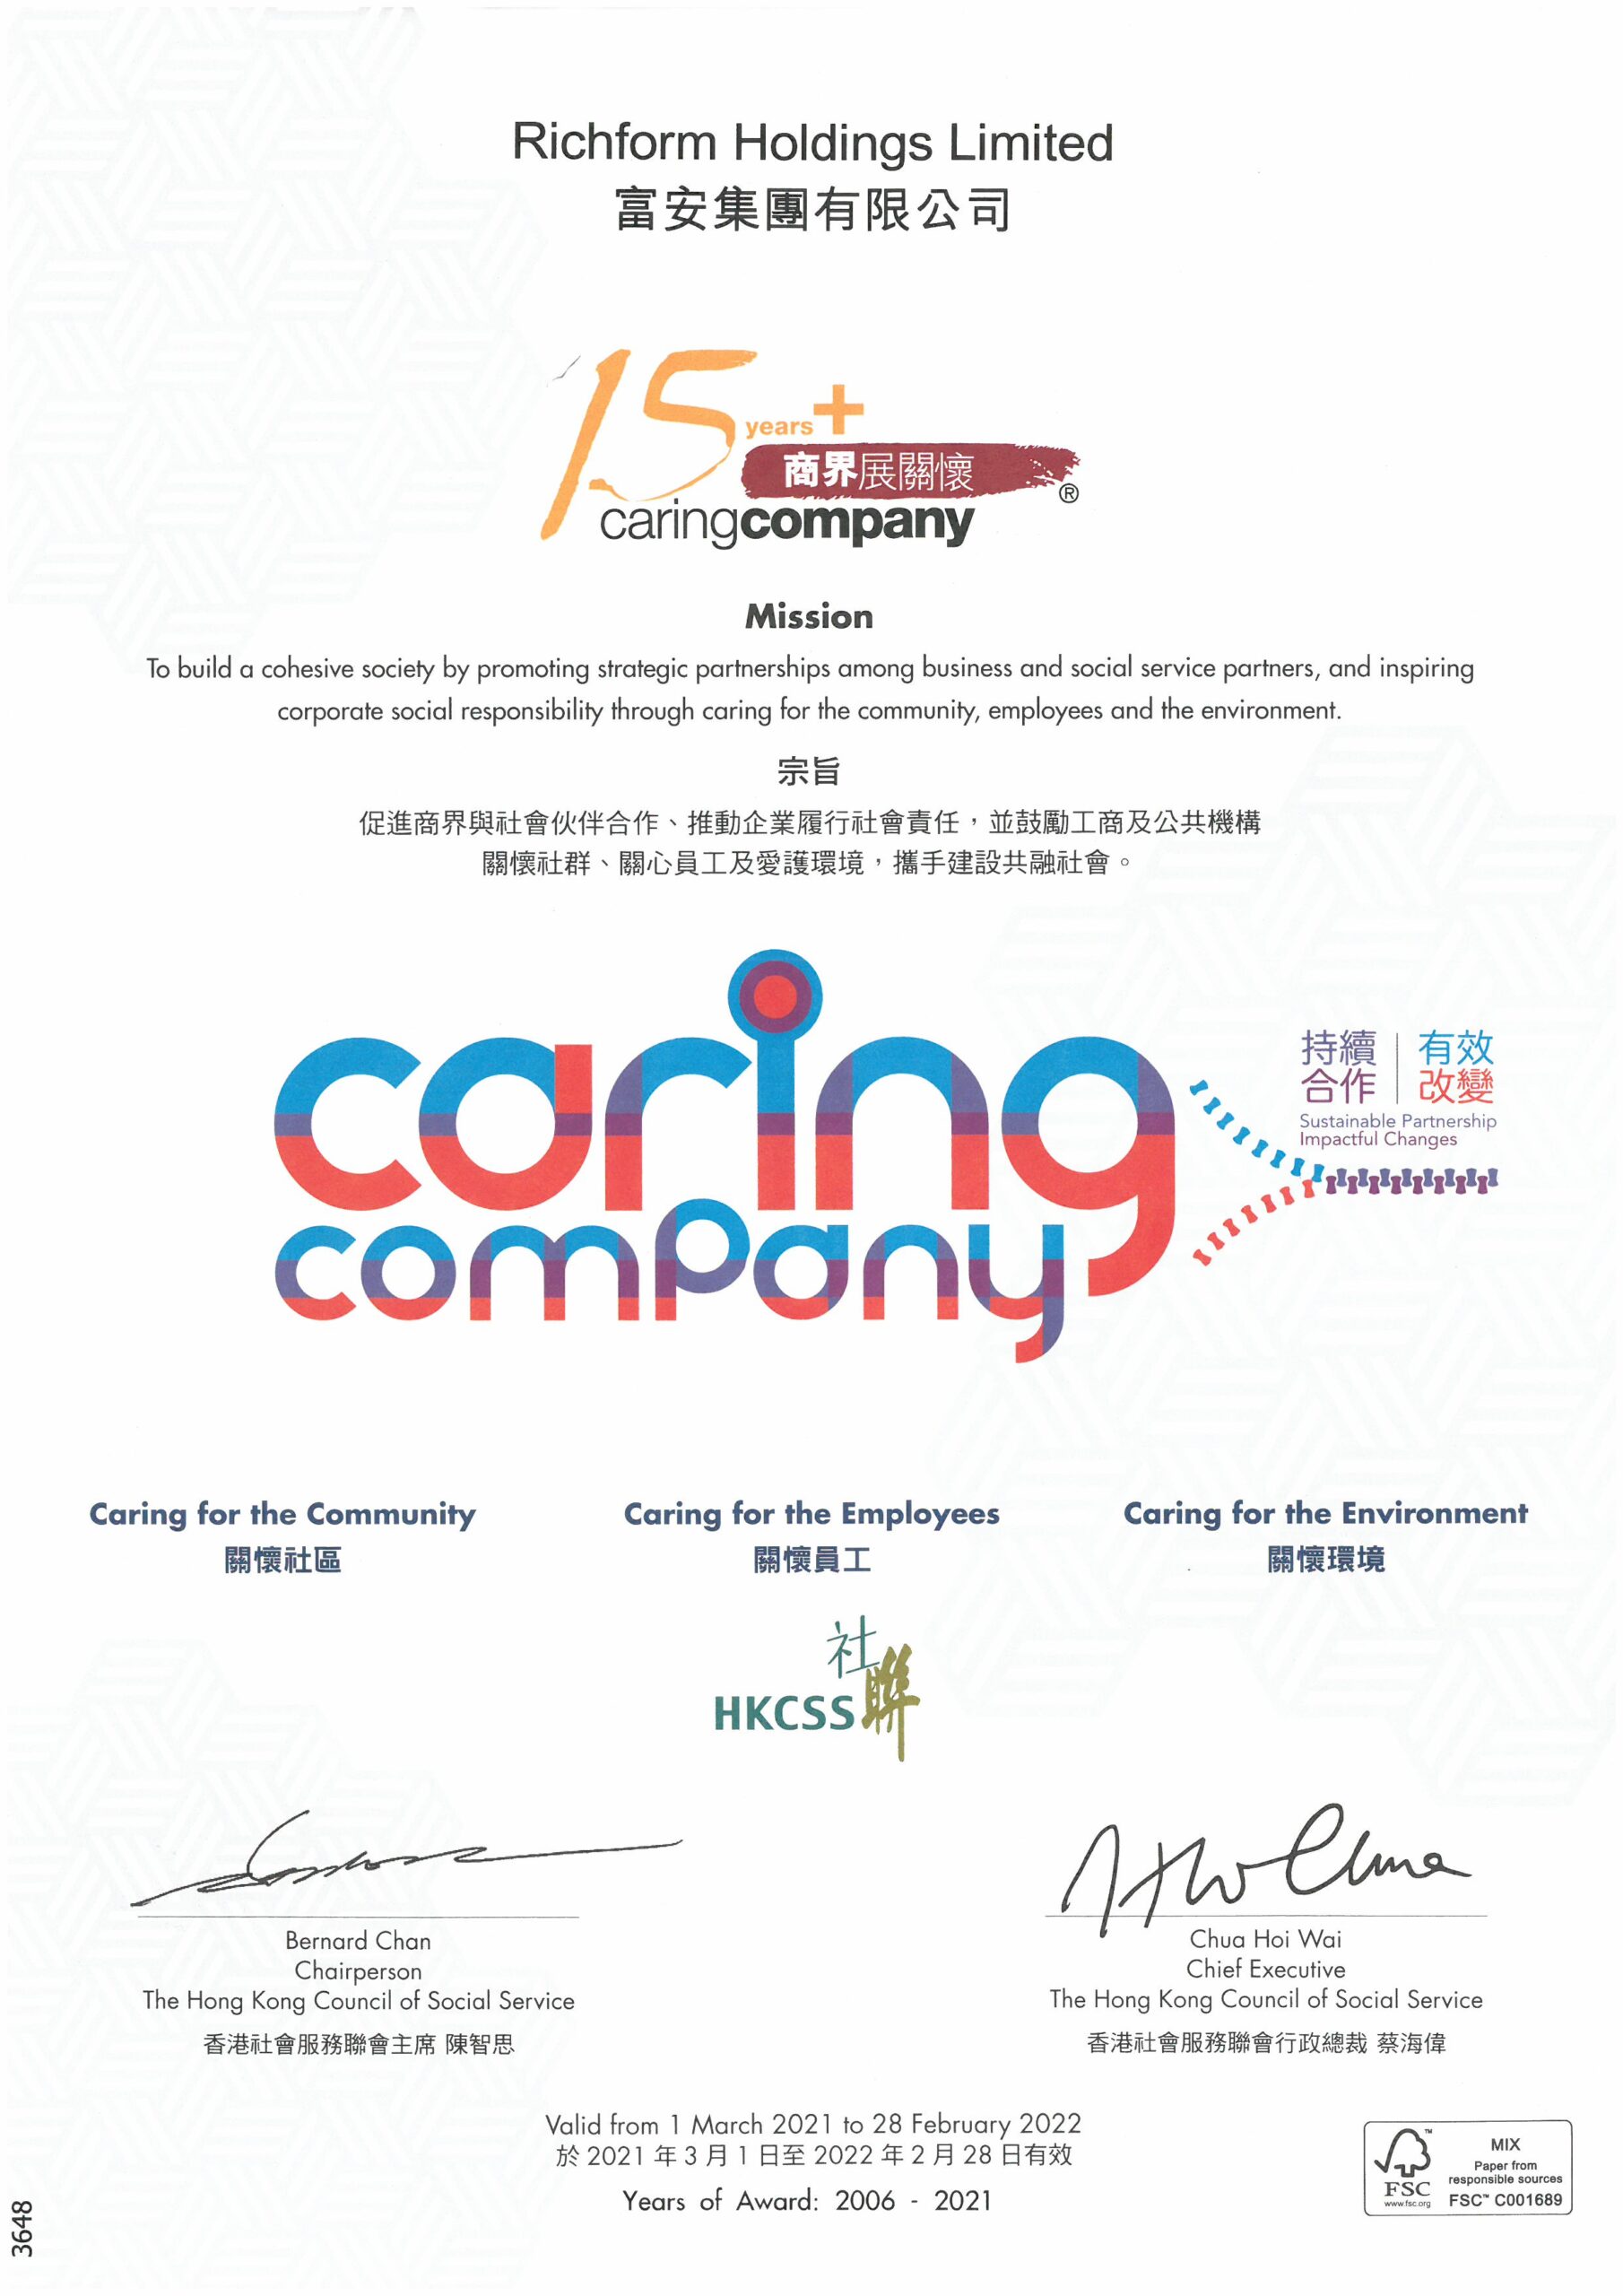 15 Years plus Caring Company award